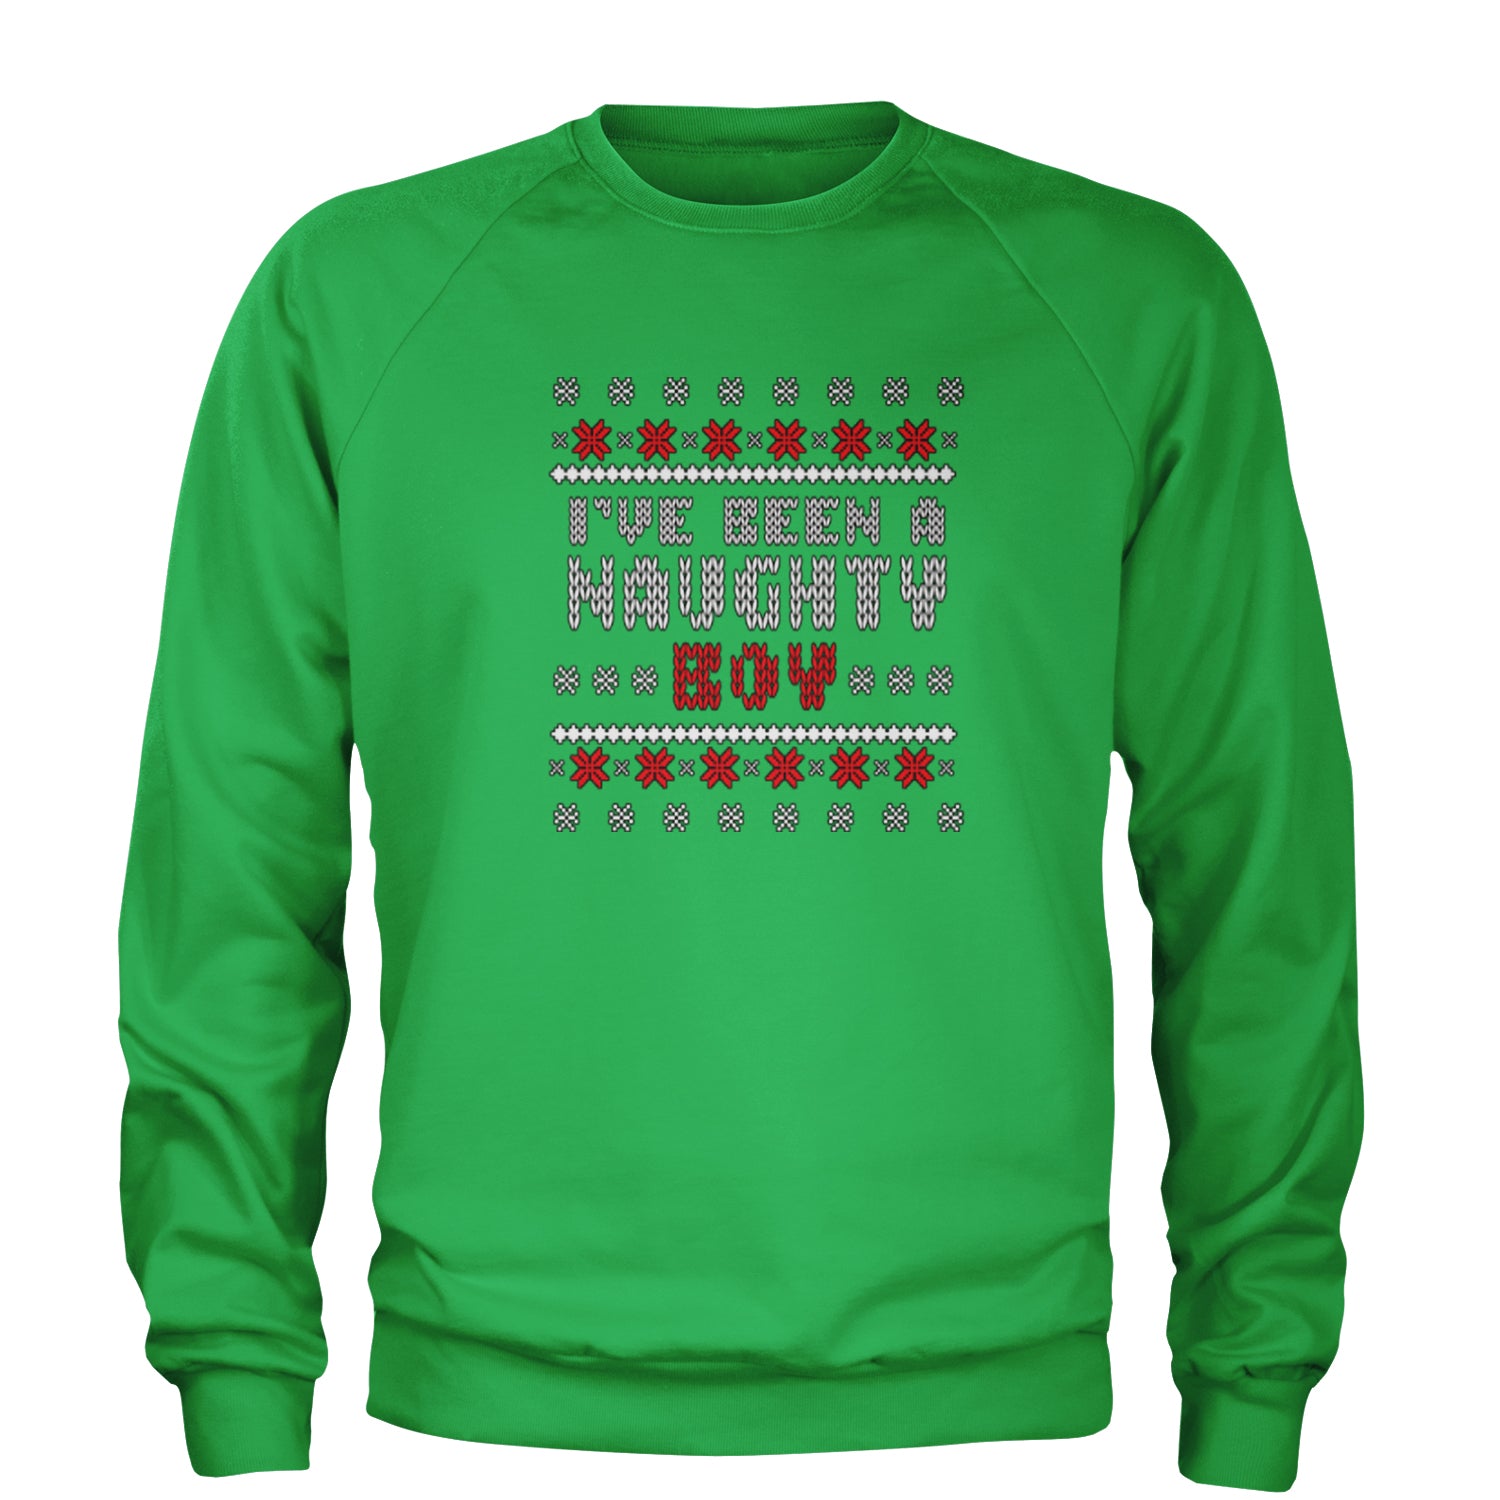 I've Been A Naughty Boy Ugly Christmas Adult Crewneck Sweatshirt list, naughty, nice, santa, ugly, xmas by Expression Tees